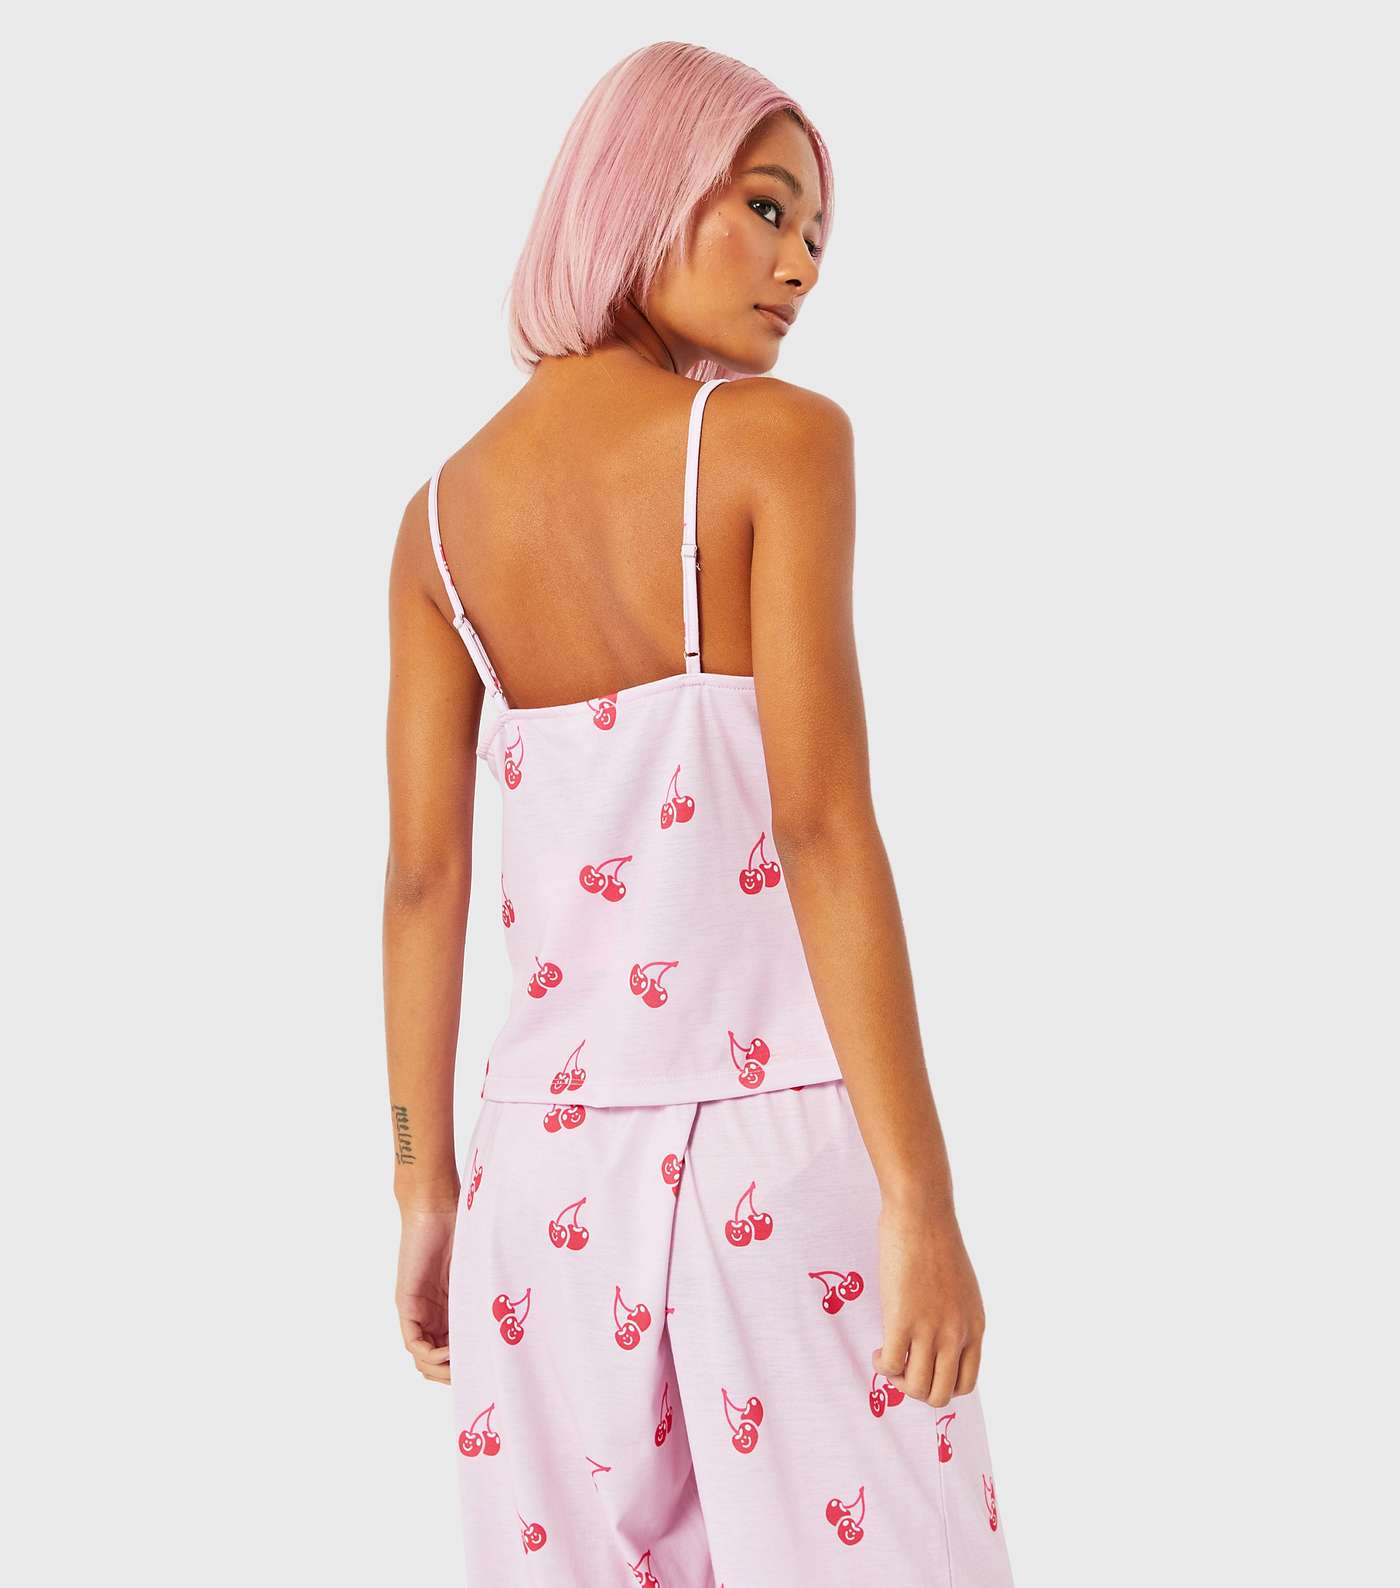 Skinnydip Pink Lace Trim Pyjama Set with Cherry Print Image 5